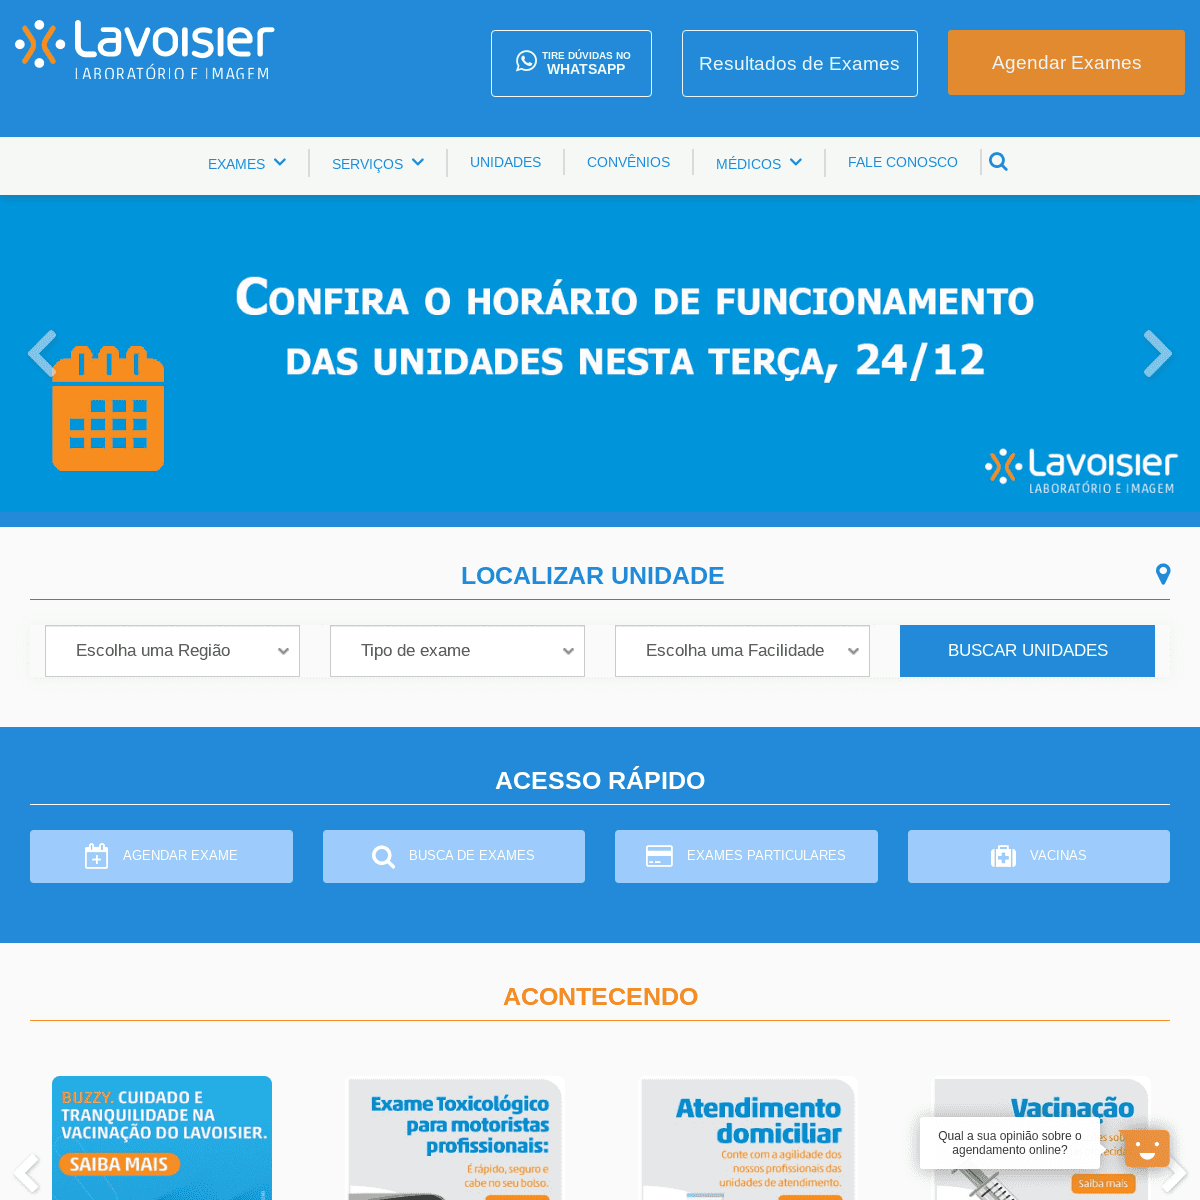 A complete backup of lavoisier.com.br